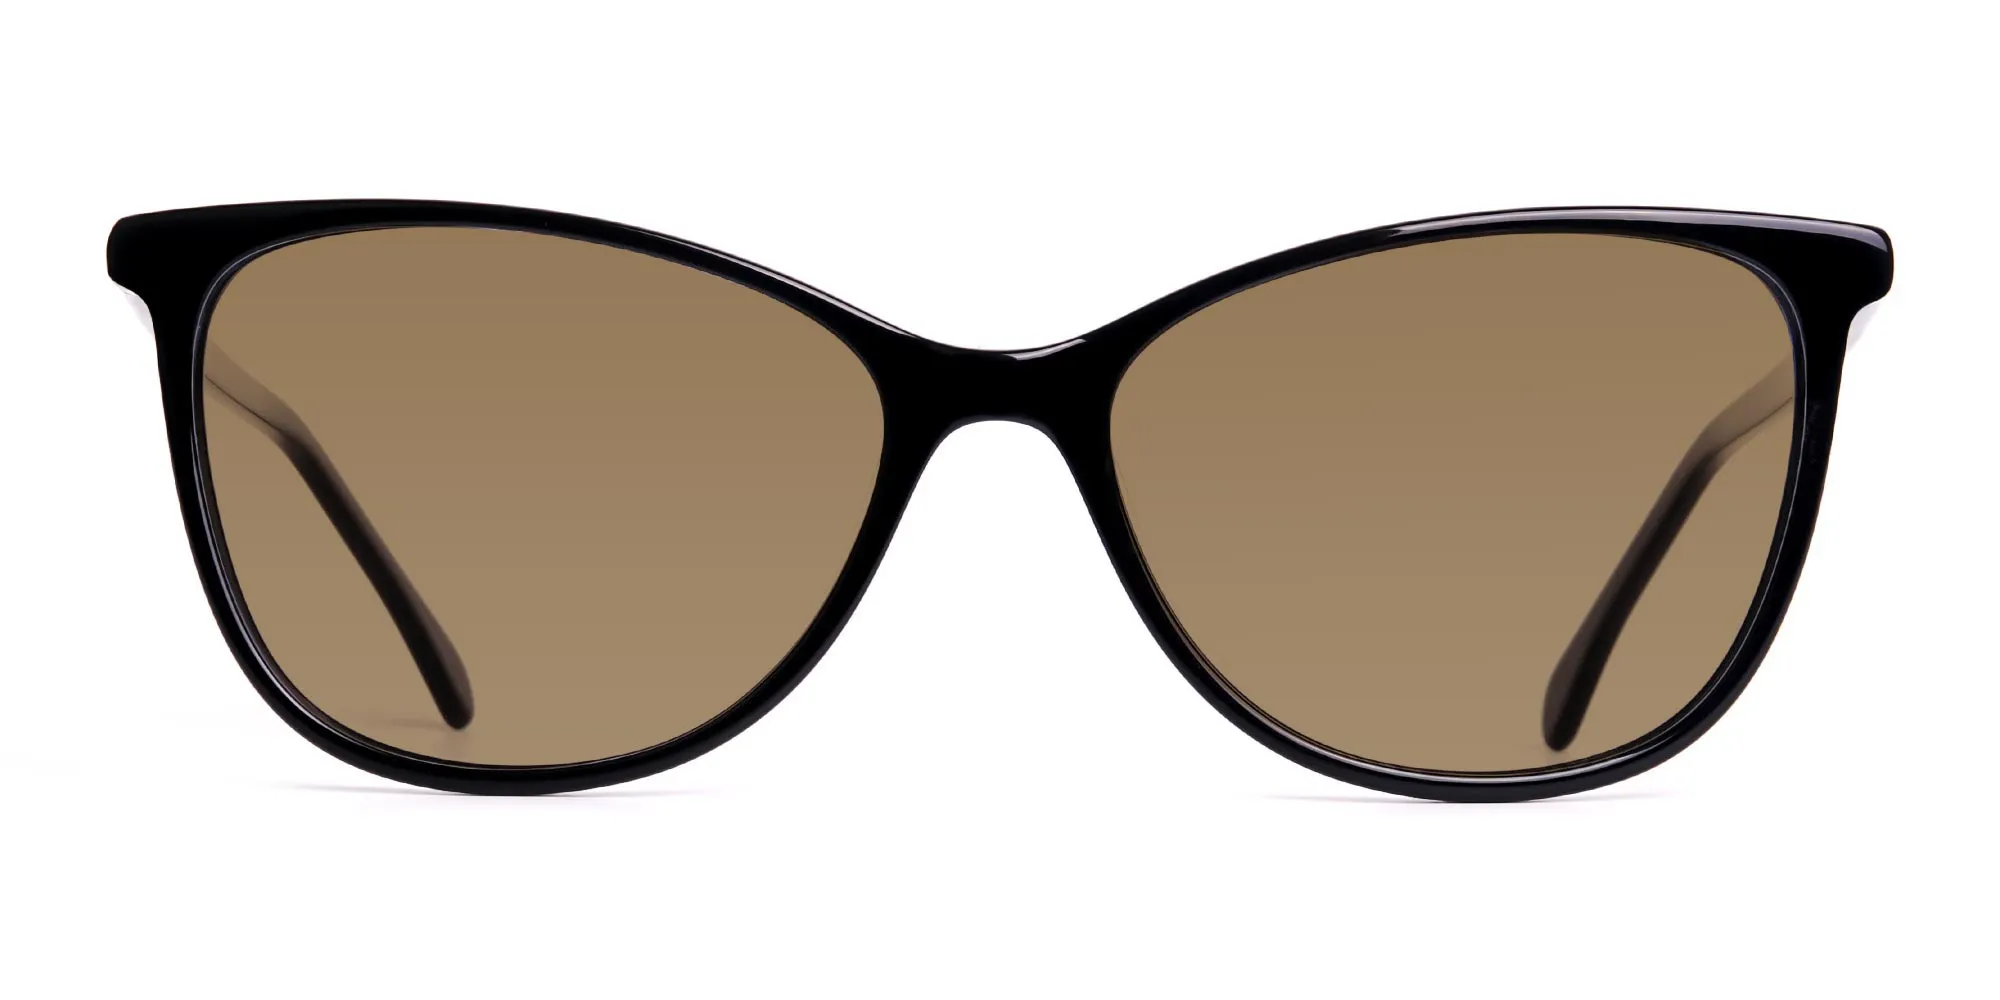 black-cat-eye-full-rim-dark-brown-tinted-sunglasses-frame-2